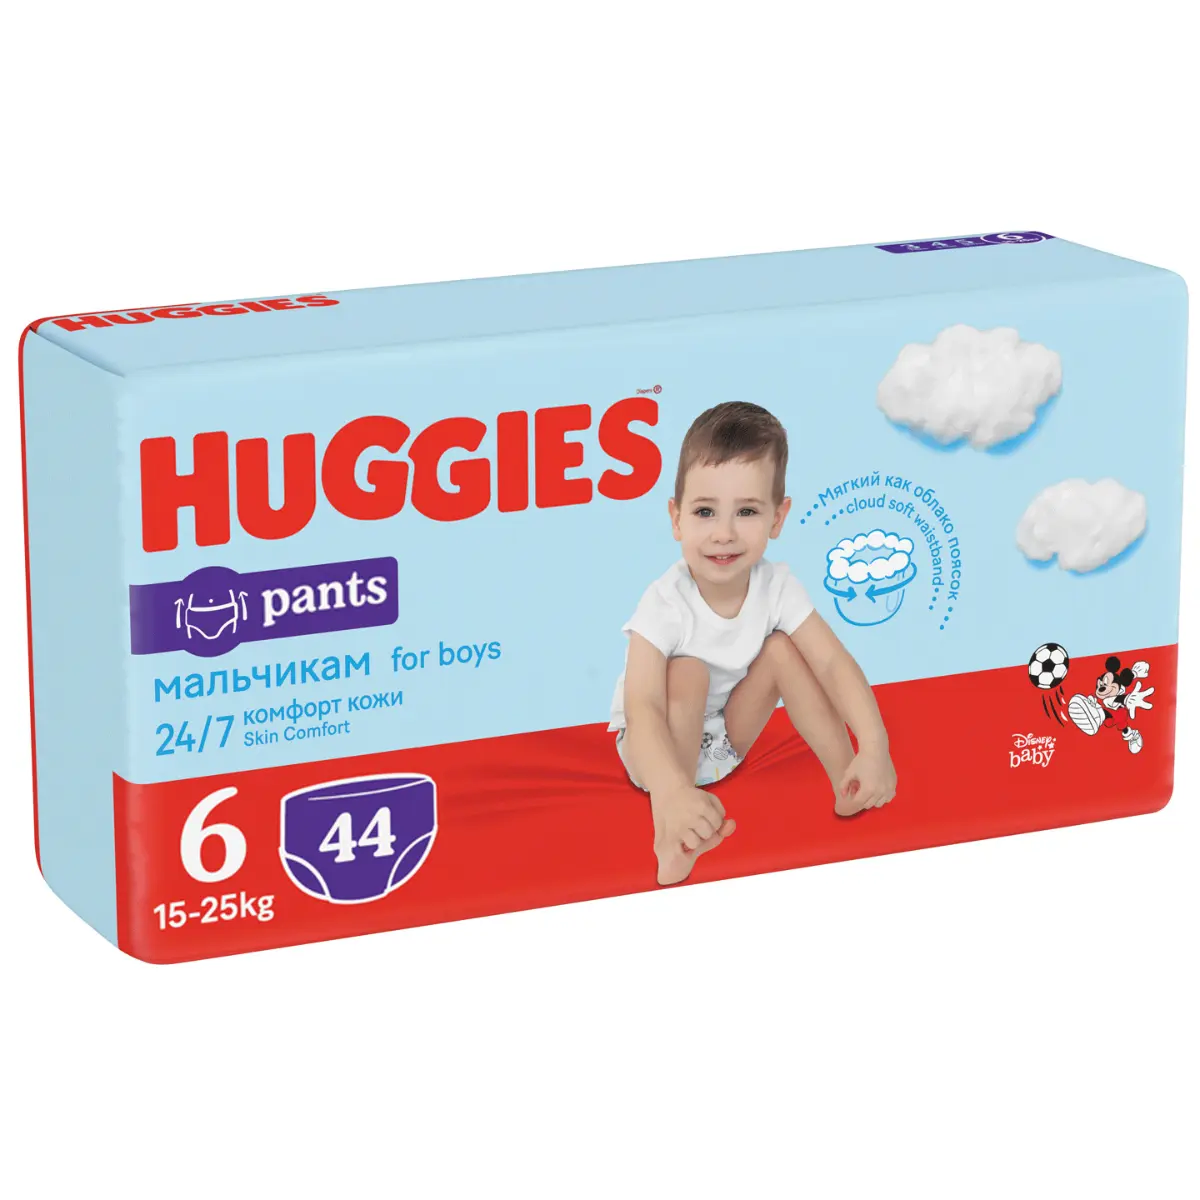 Scutece Huggies Pants Boy, marimea 6, 15-25 kg, 44 bucati